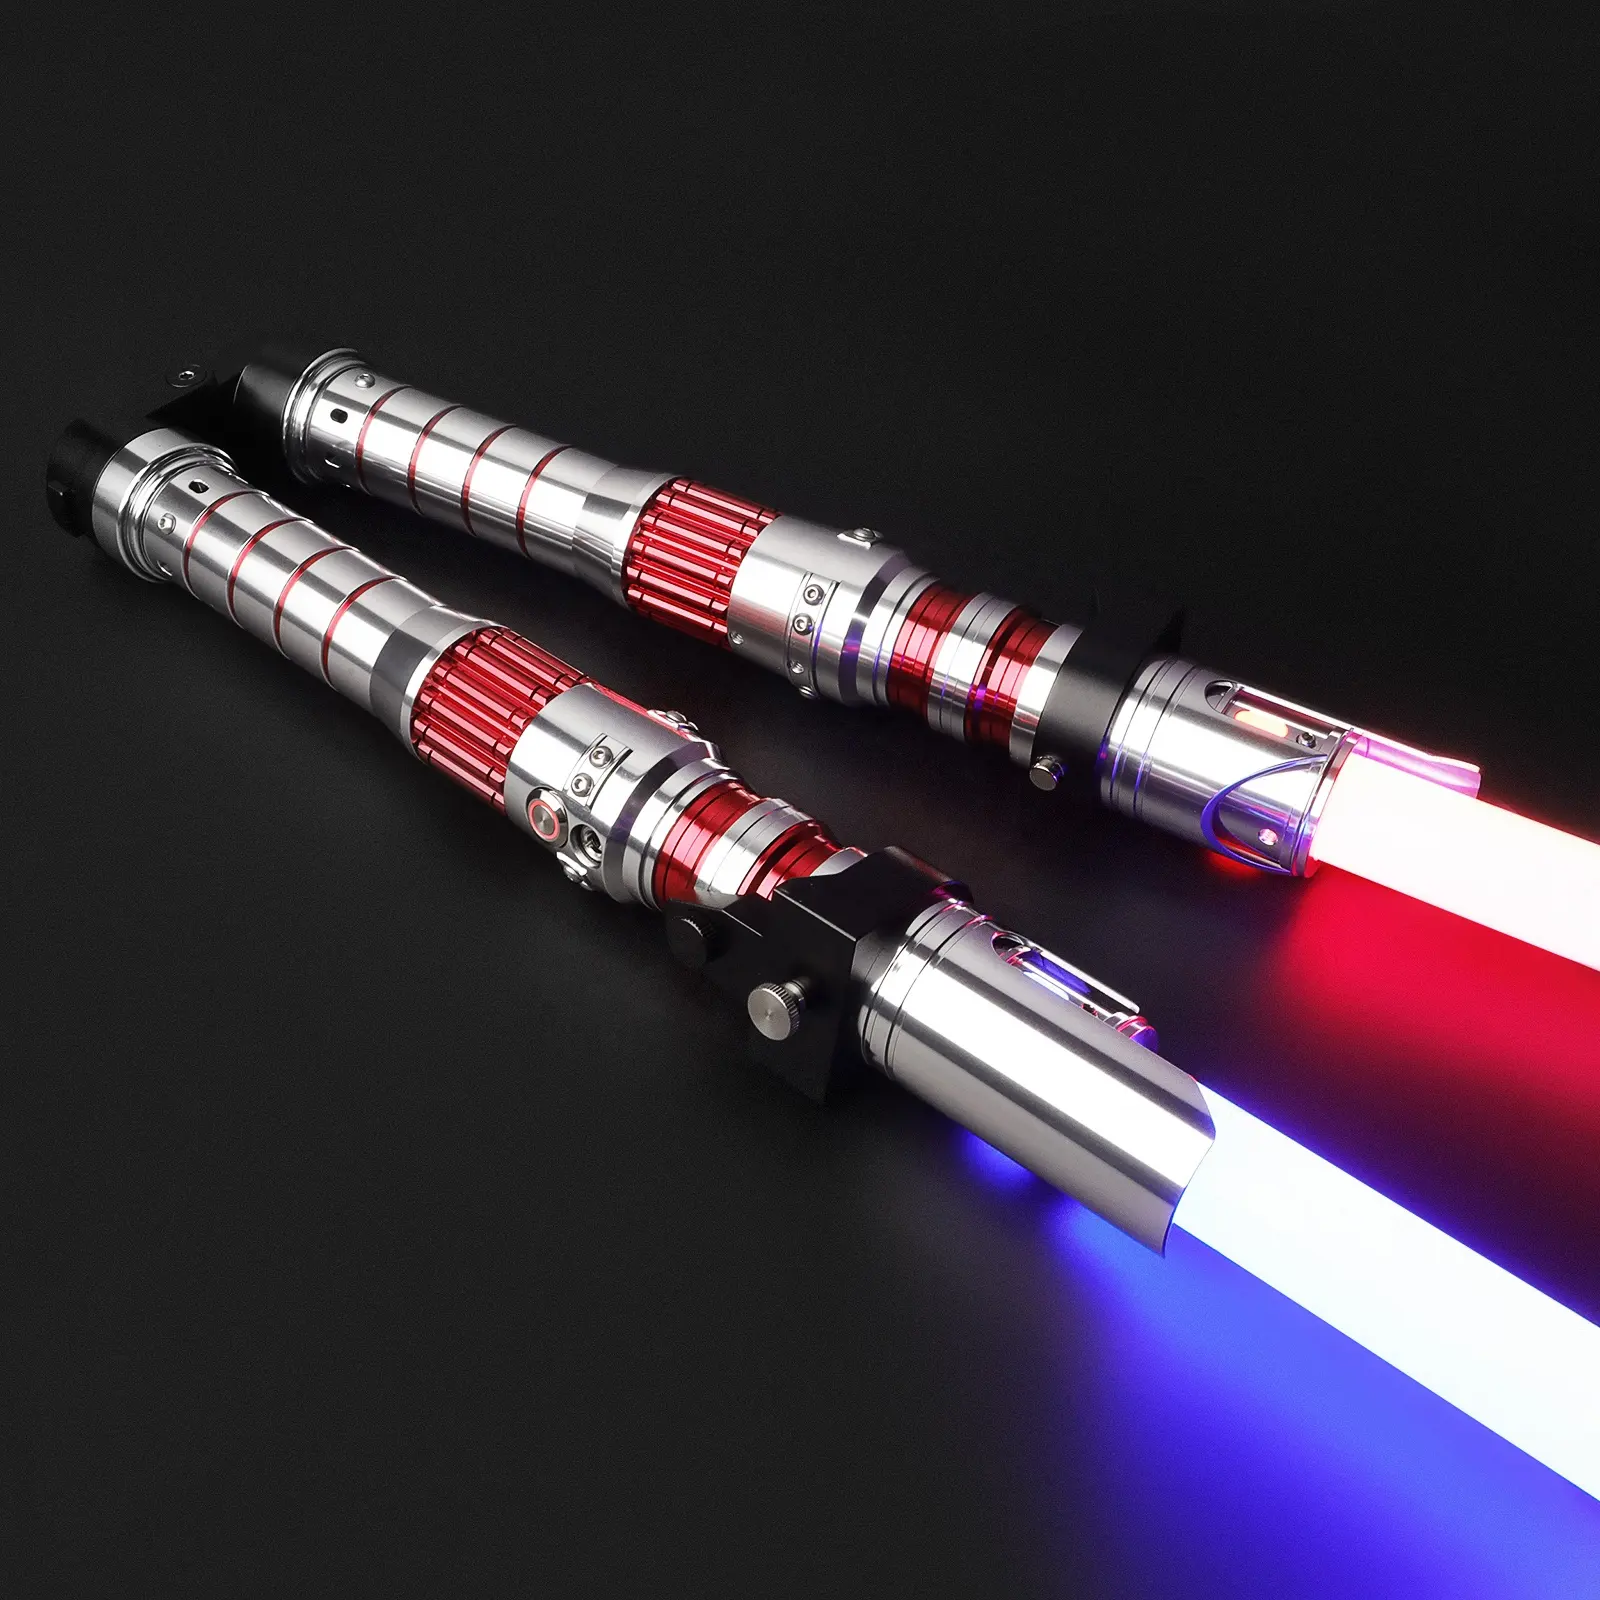 LGT Saberstudio Dark Rey lightsaber force dueling smooth swing colorful luminous flashing LED laser sword light up toys